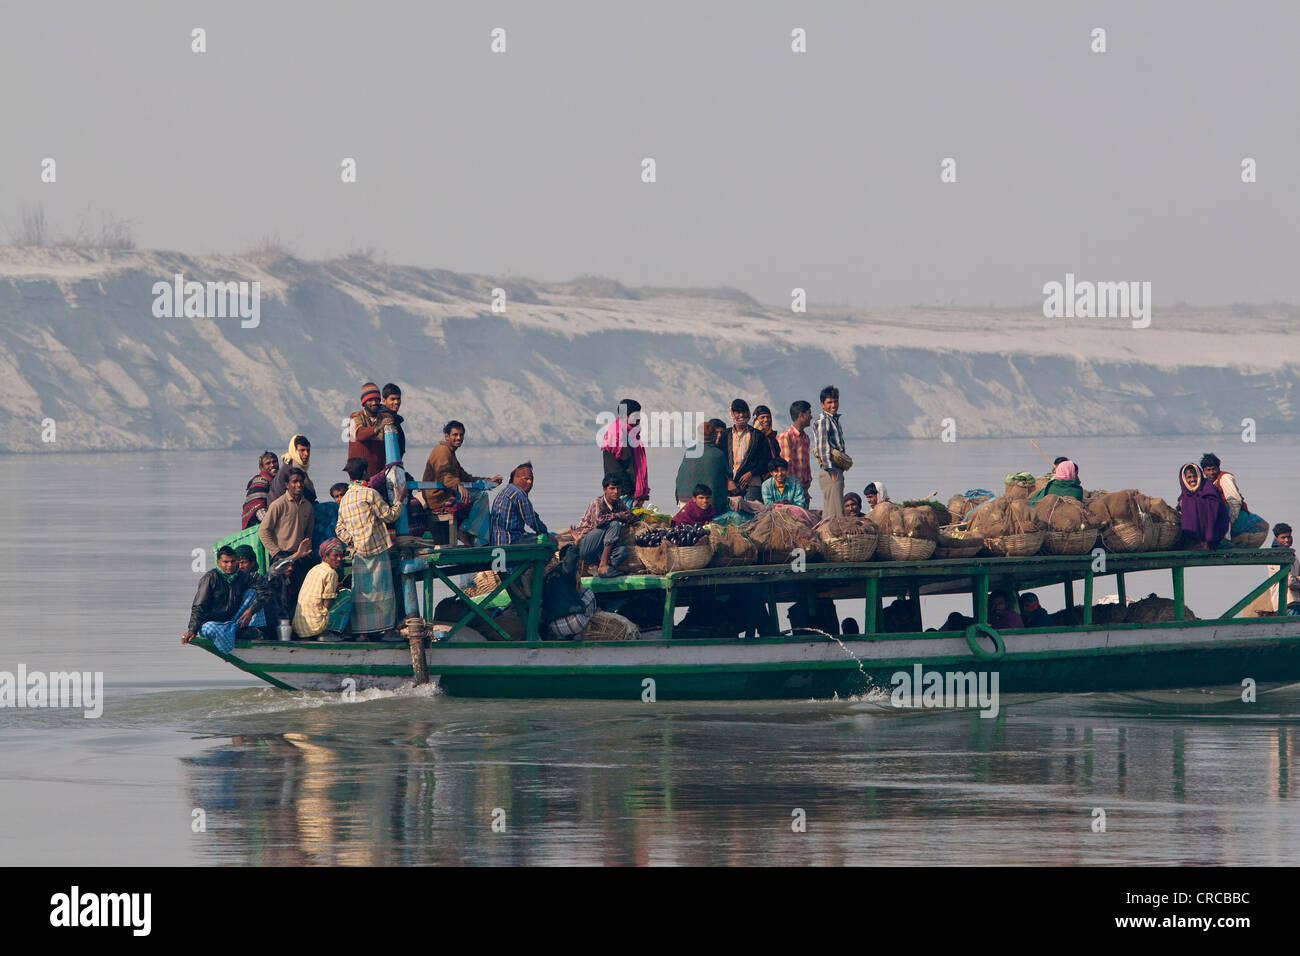 Affollato traghetto sul fiume, il fiume Brahmaputra, Guwahati, Assam, India Foto Stock